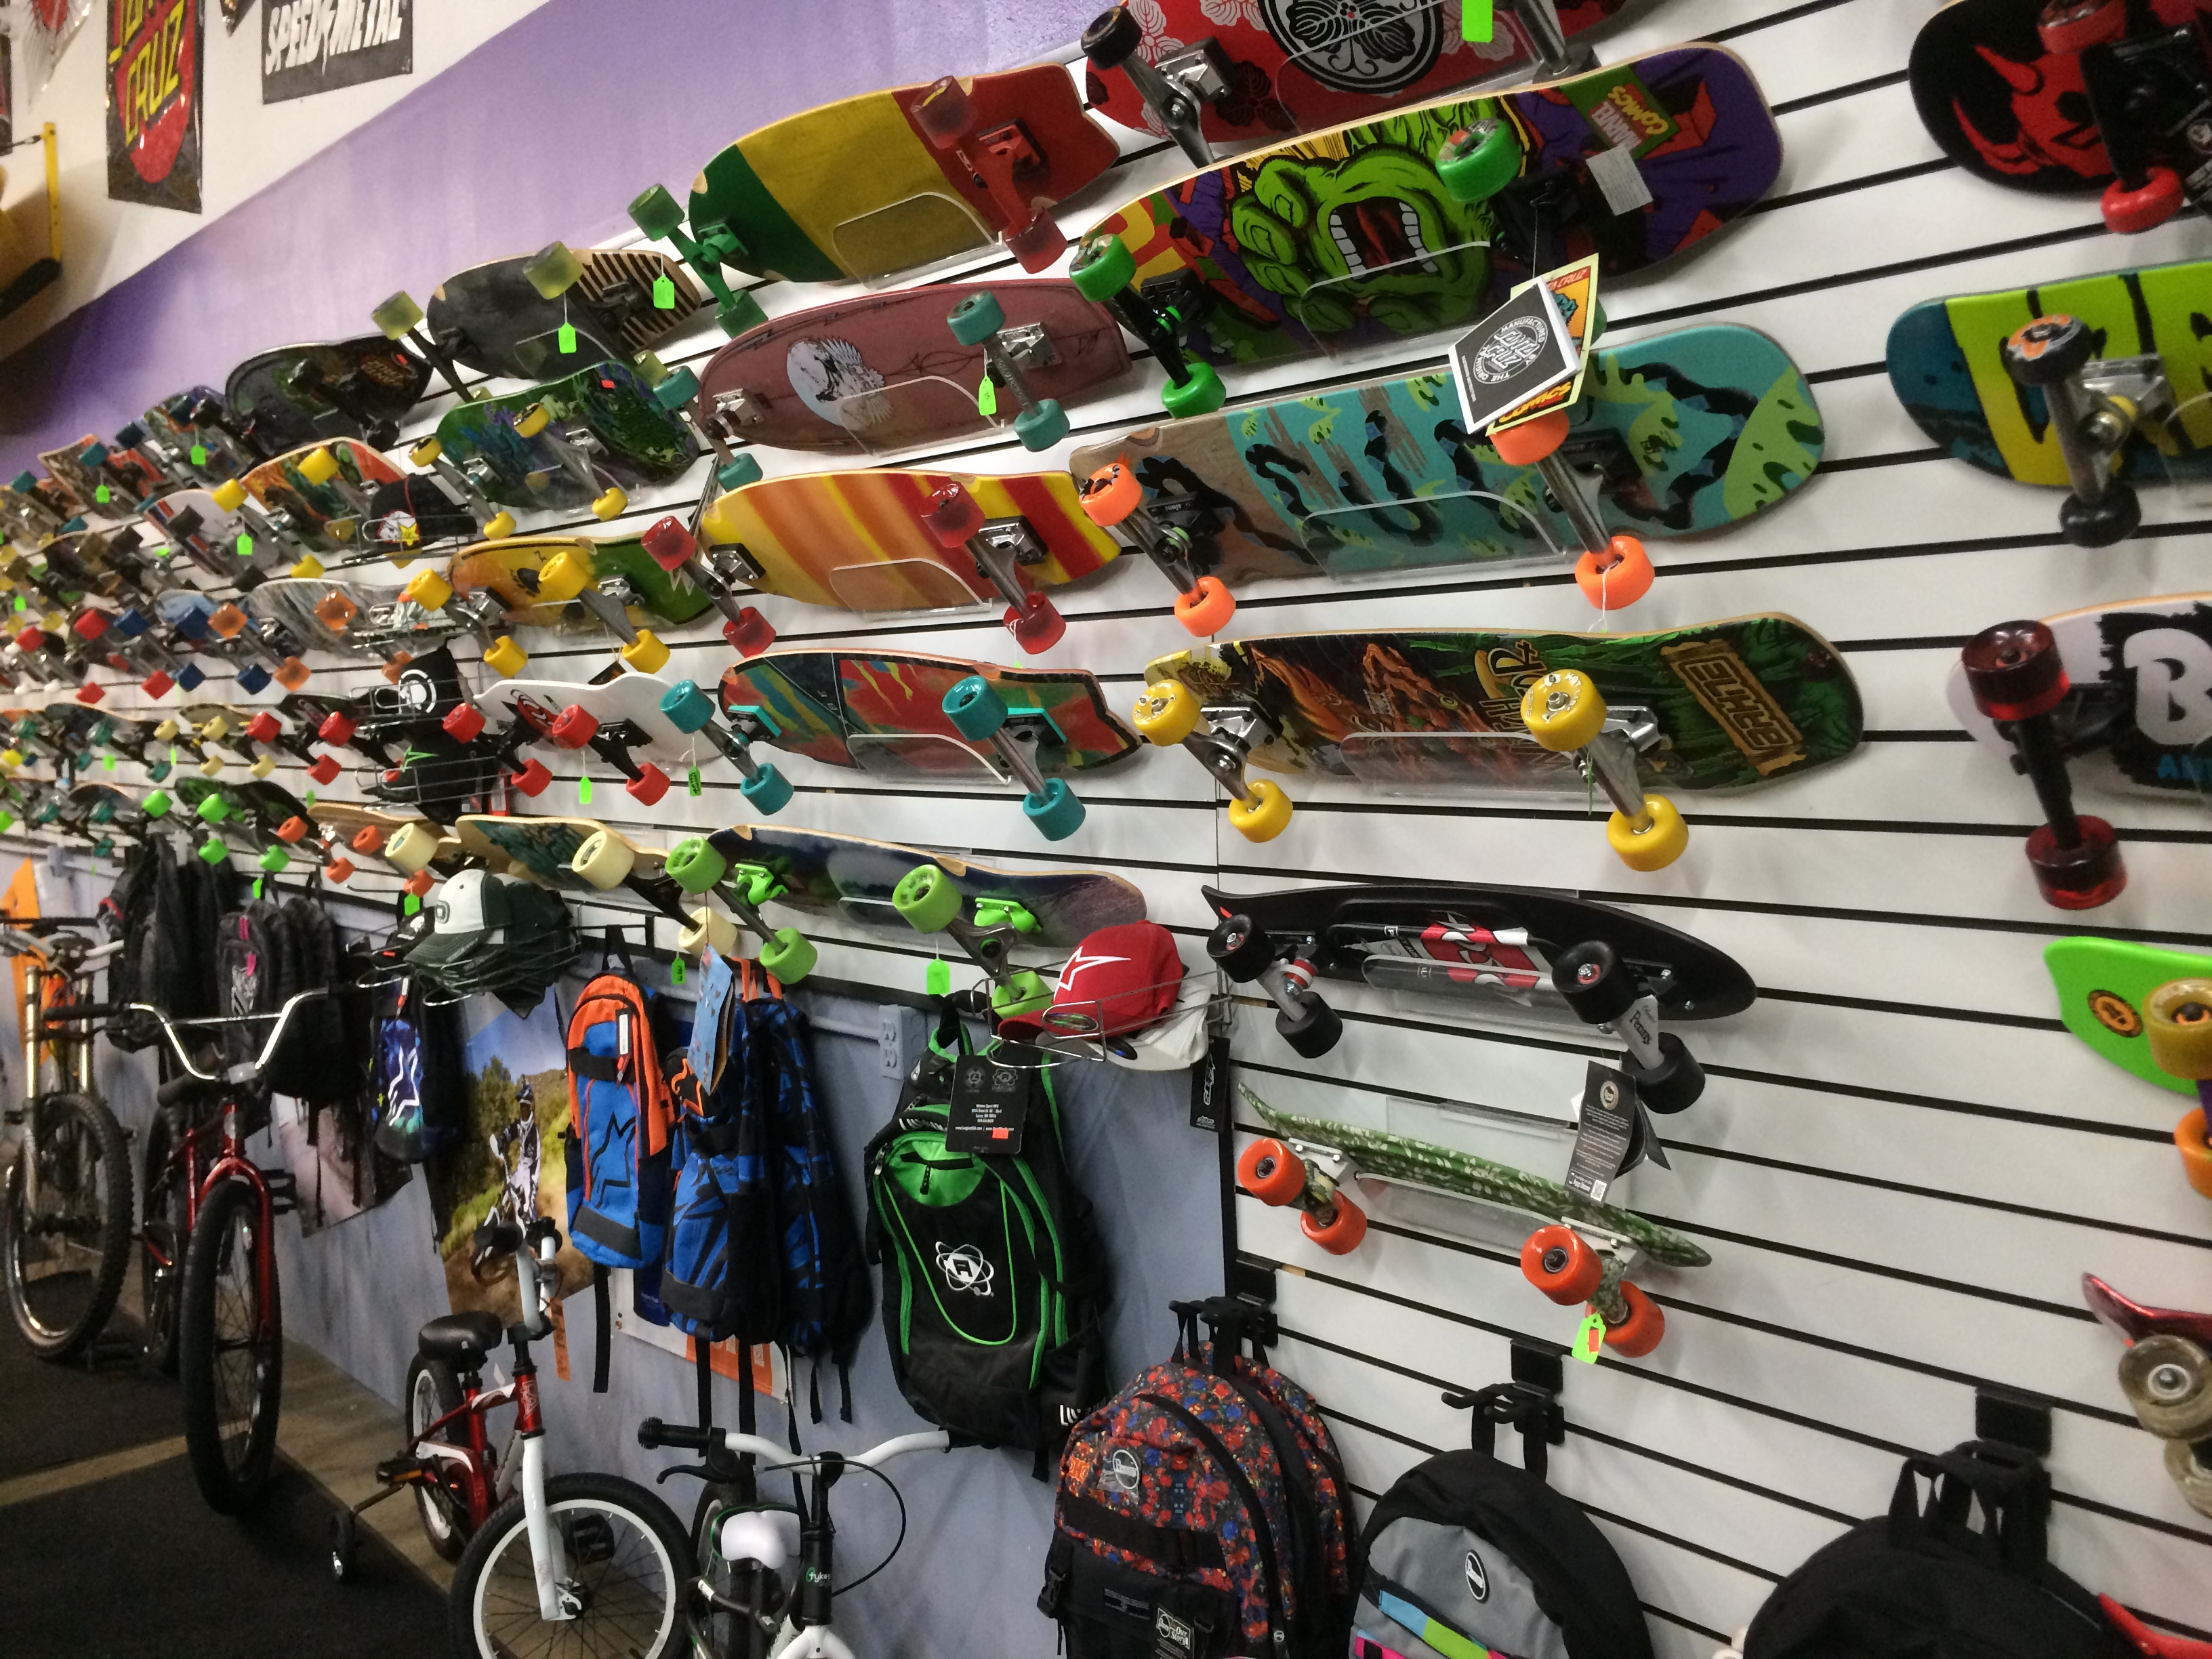 A lot of skateboards